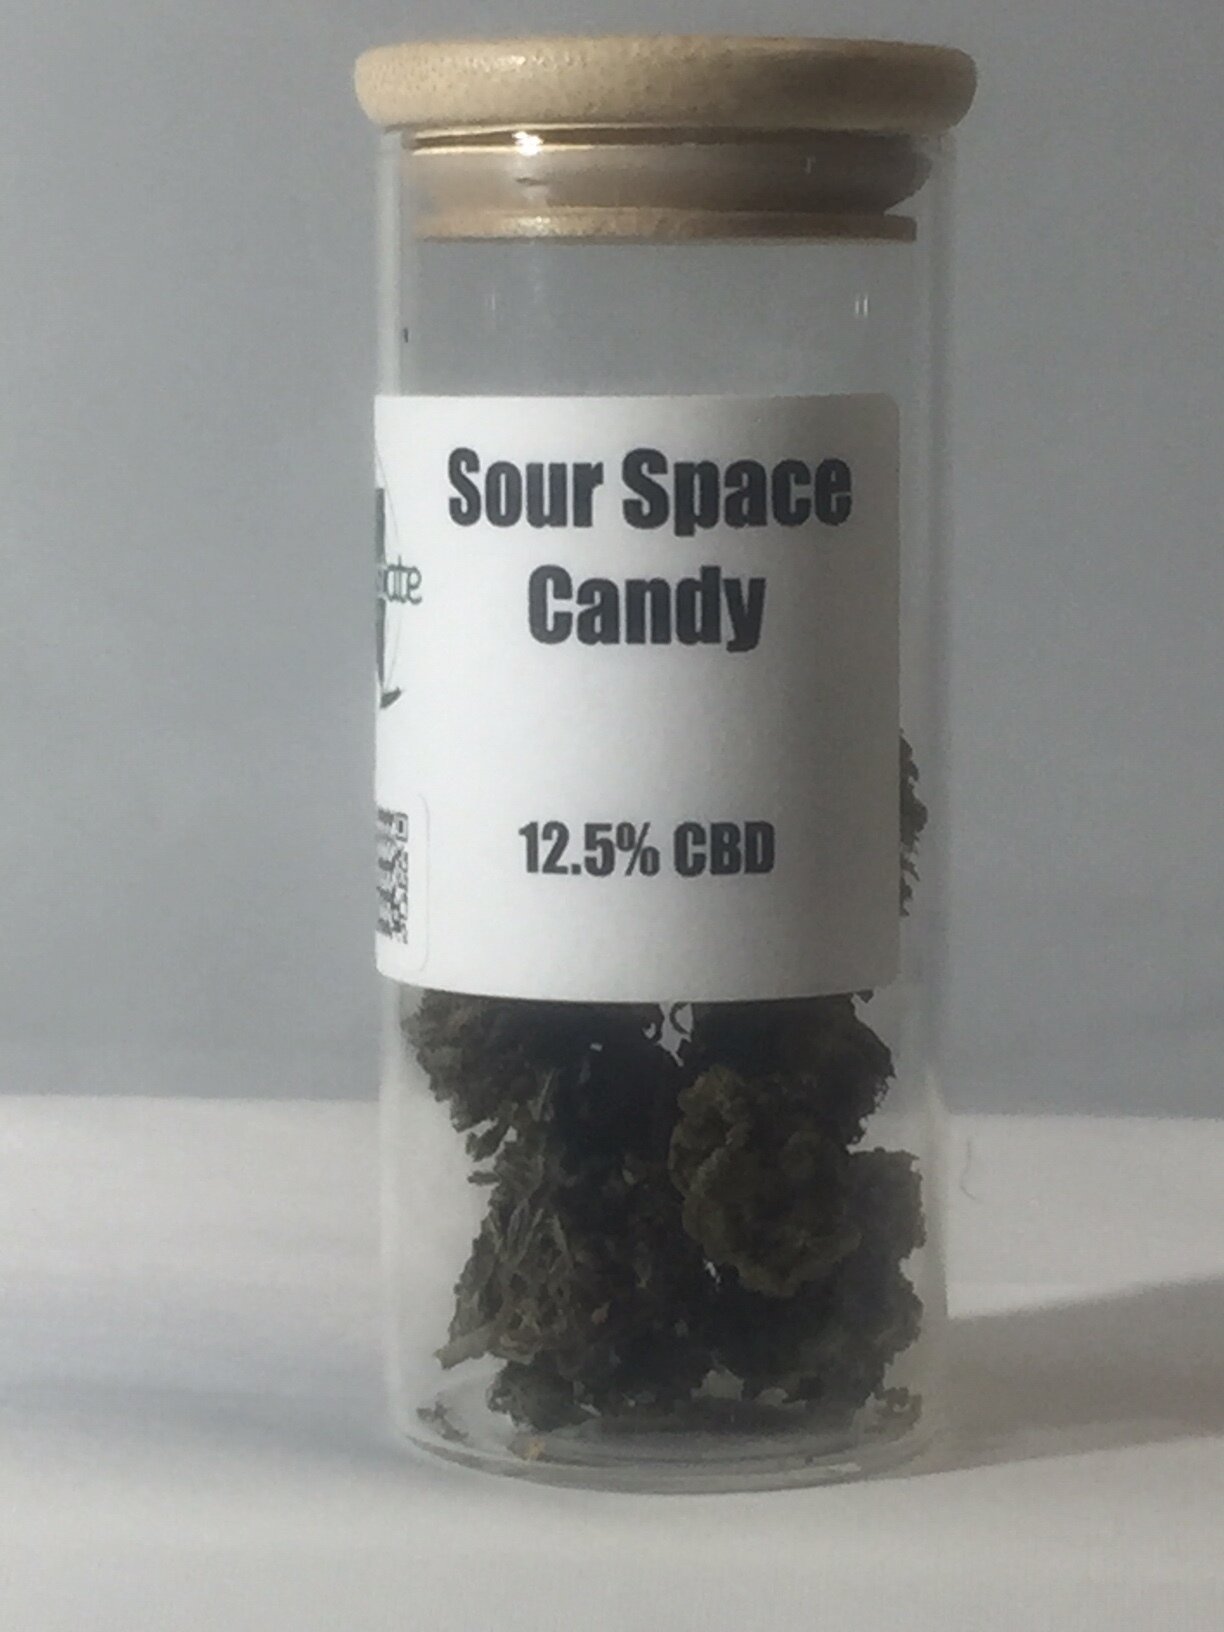 Sour Space Candy CBD.JPG